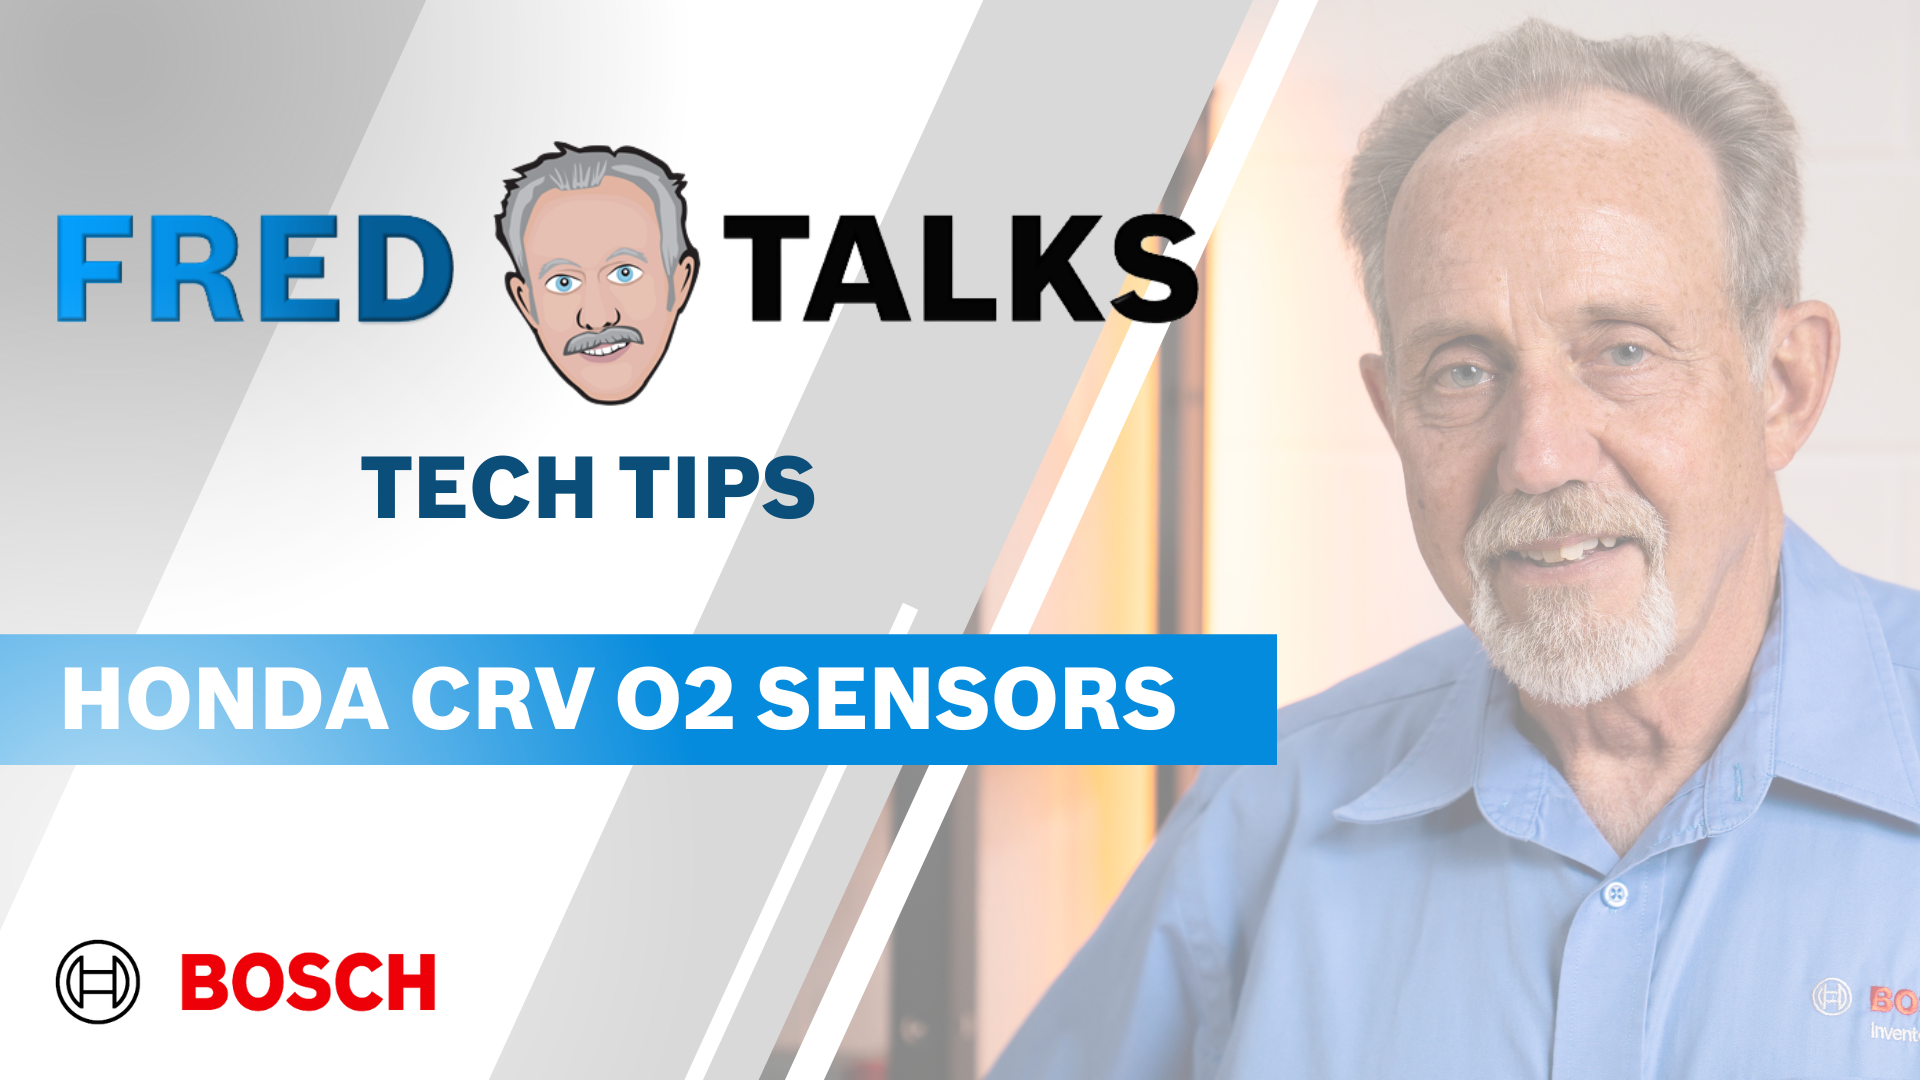 FRED TALKS Tech Tip: Honda CRV O2 Sensors Image